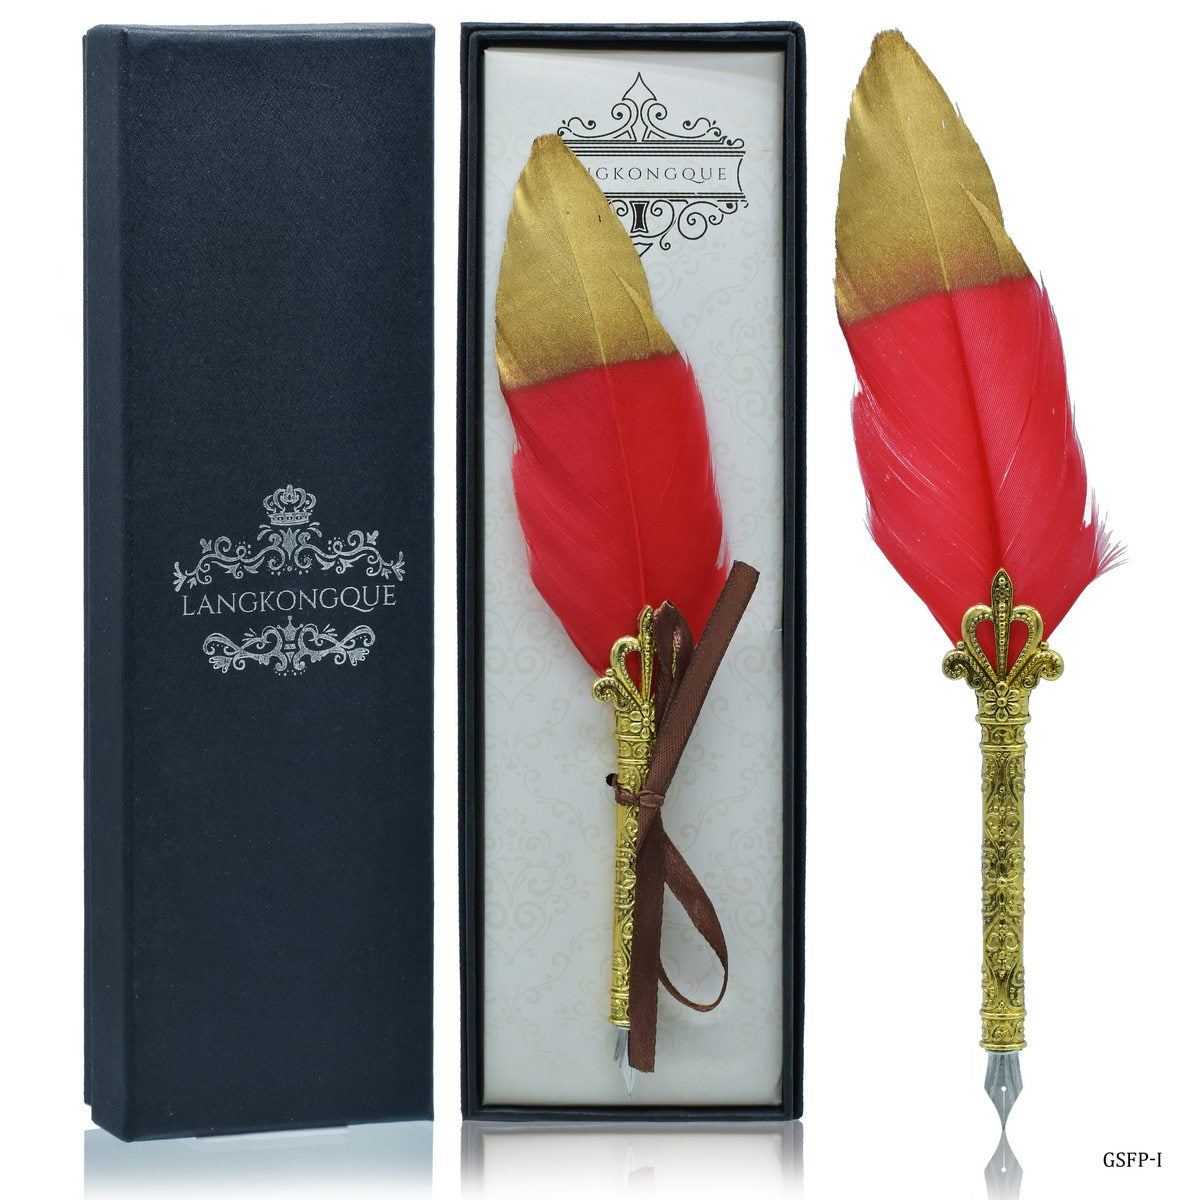 jags-mumbai Fountain pens Feather Fountain Pen Gift Set With Box